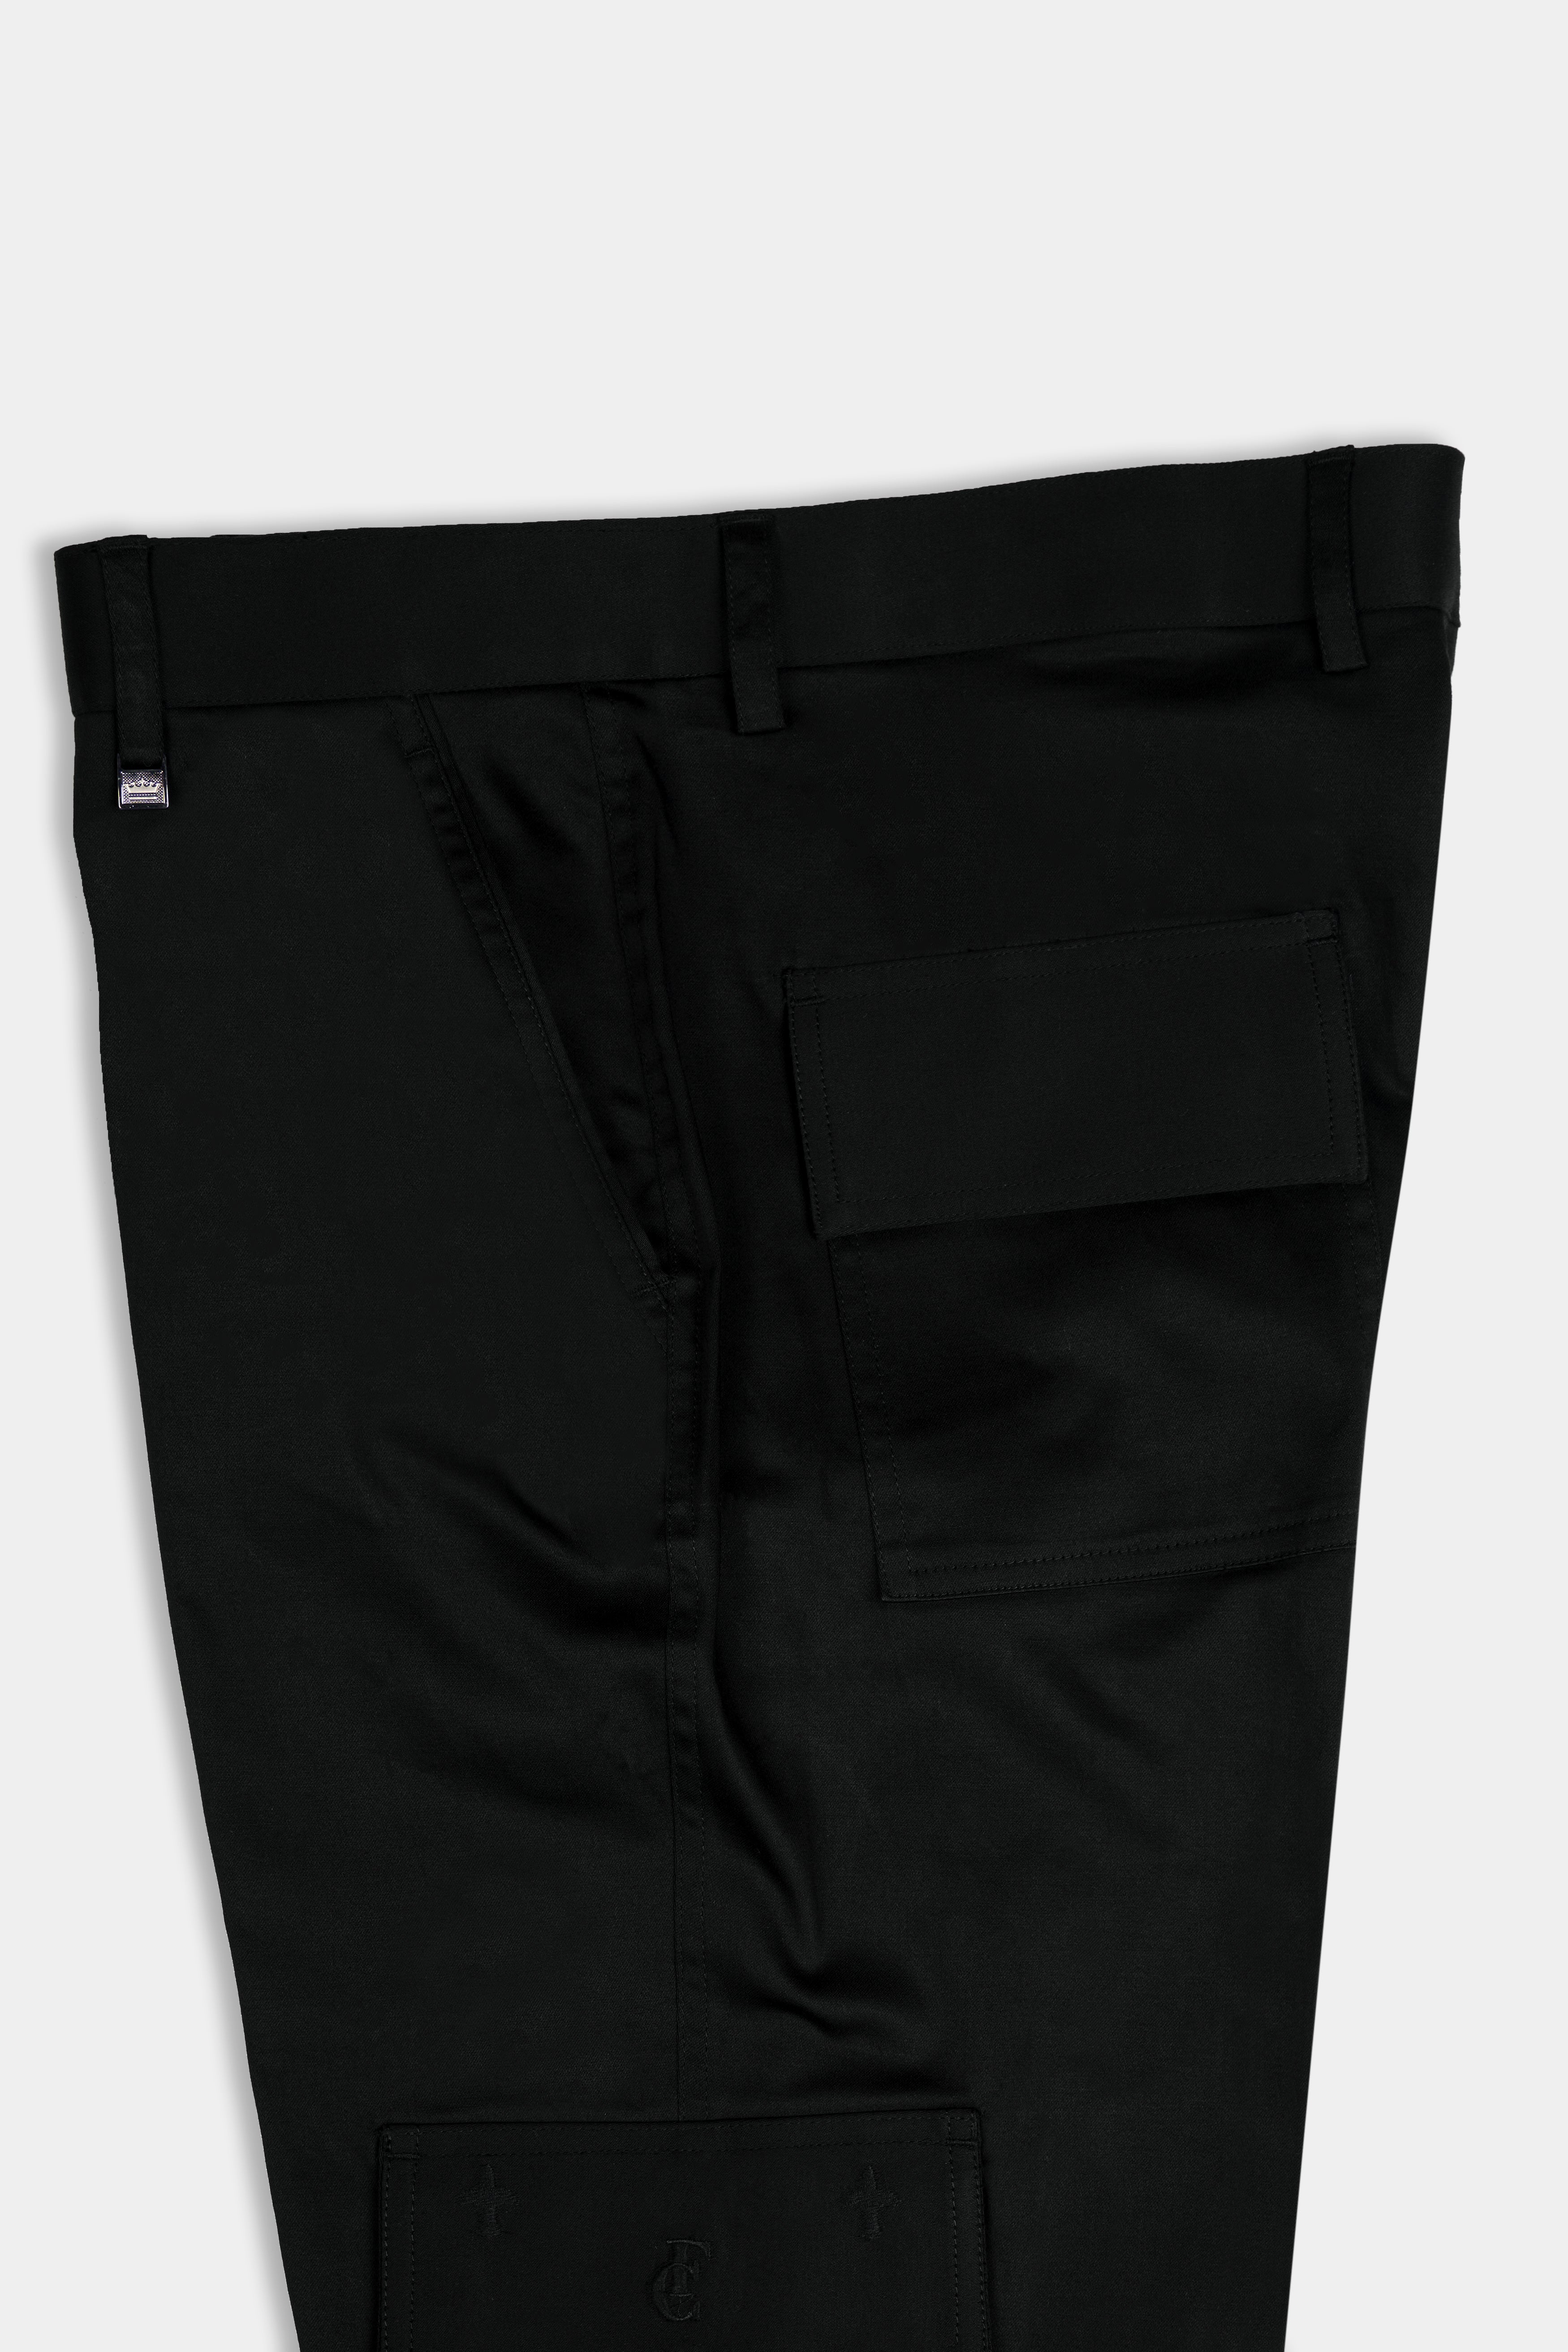 Jade Black Premium Cotton Cargo Designer Pant with Embroidered Pockets